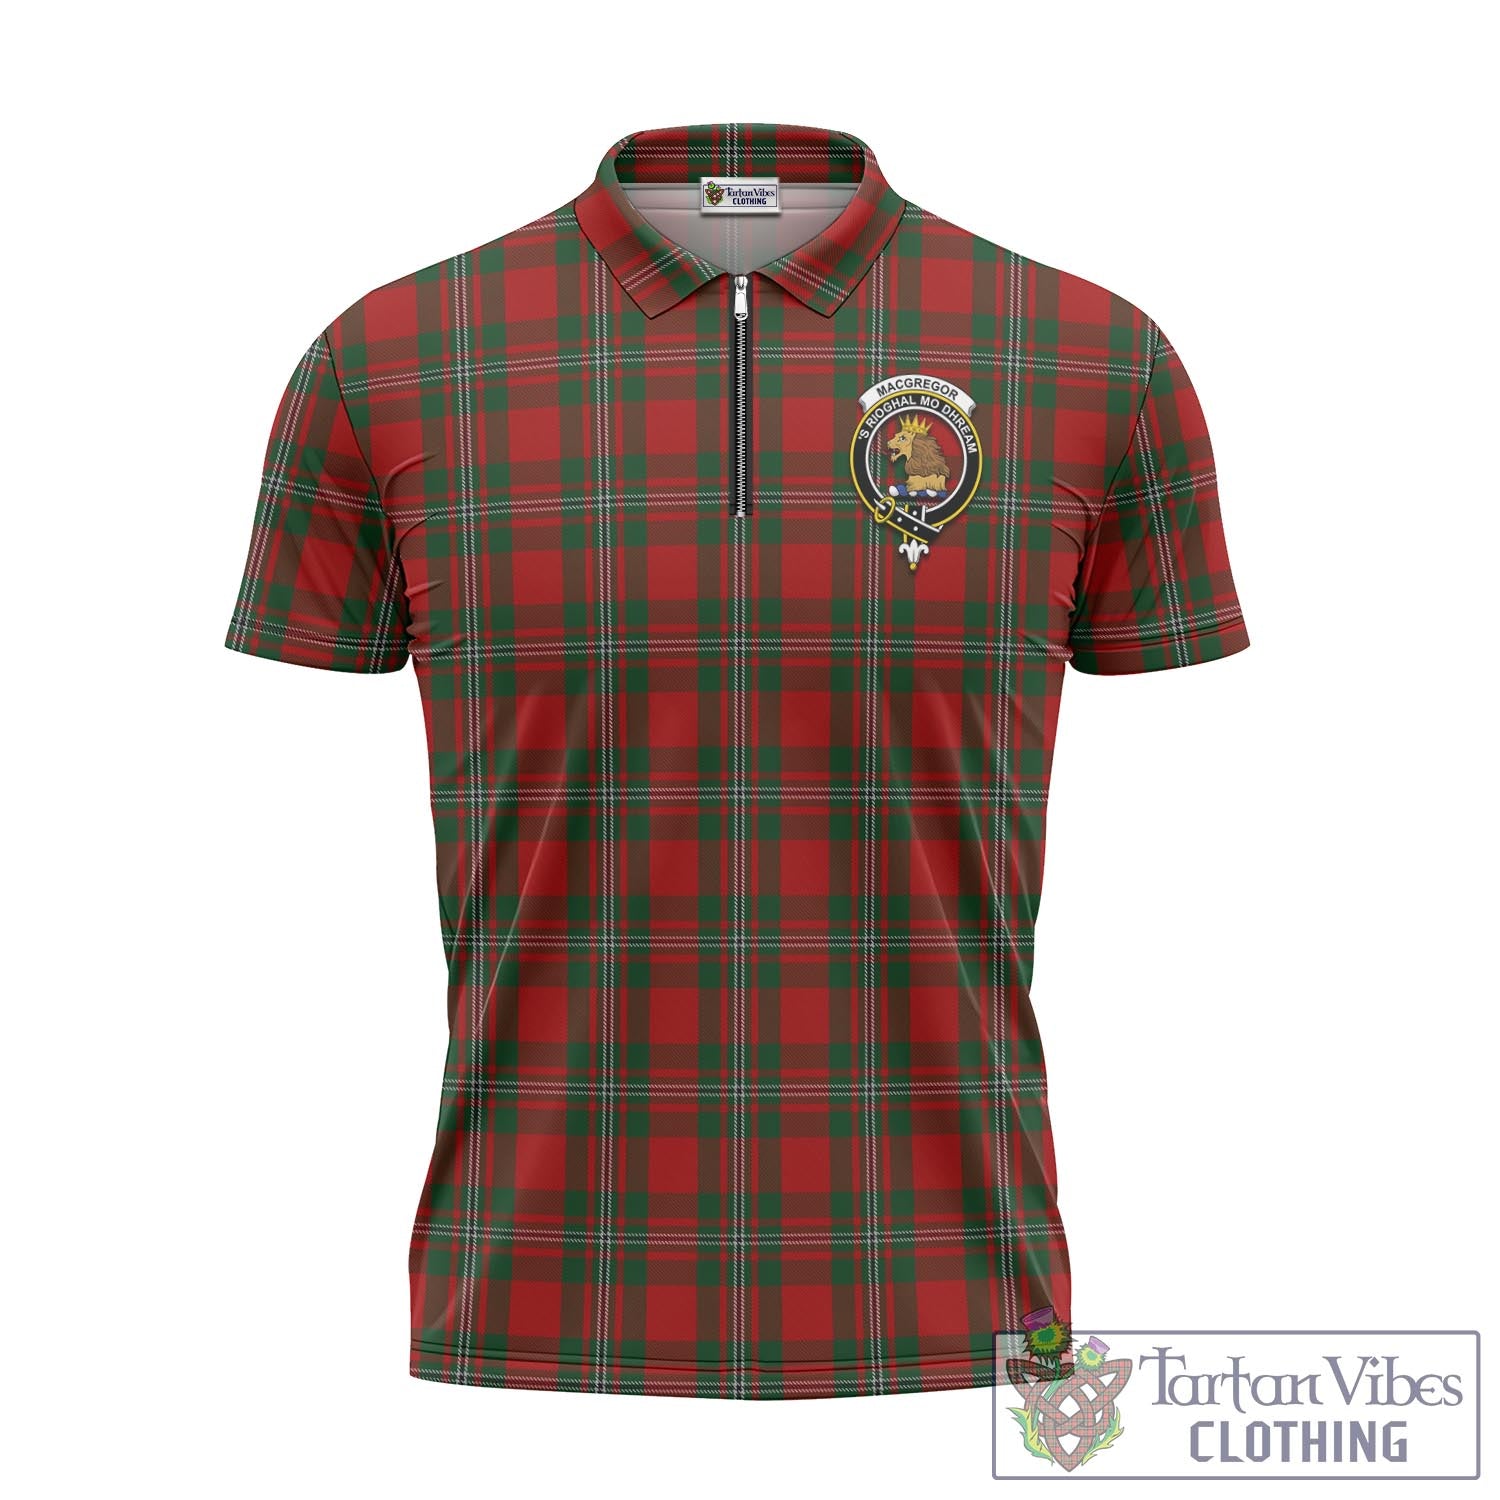 Tartan Vibes Clothing MacGregor Tartan Zipper Polo Shirt with Family Crest